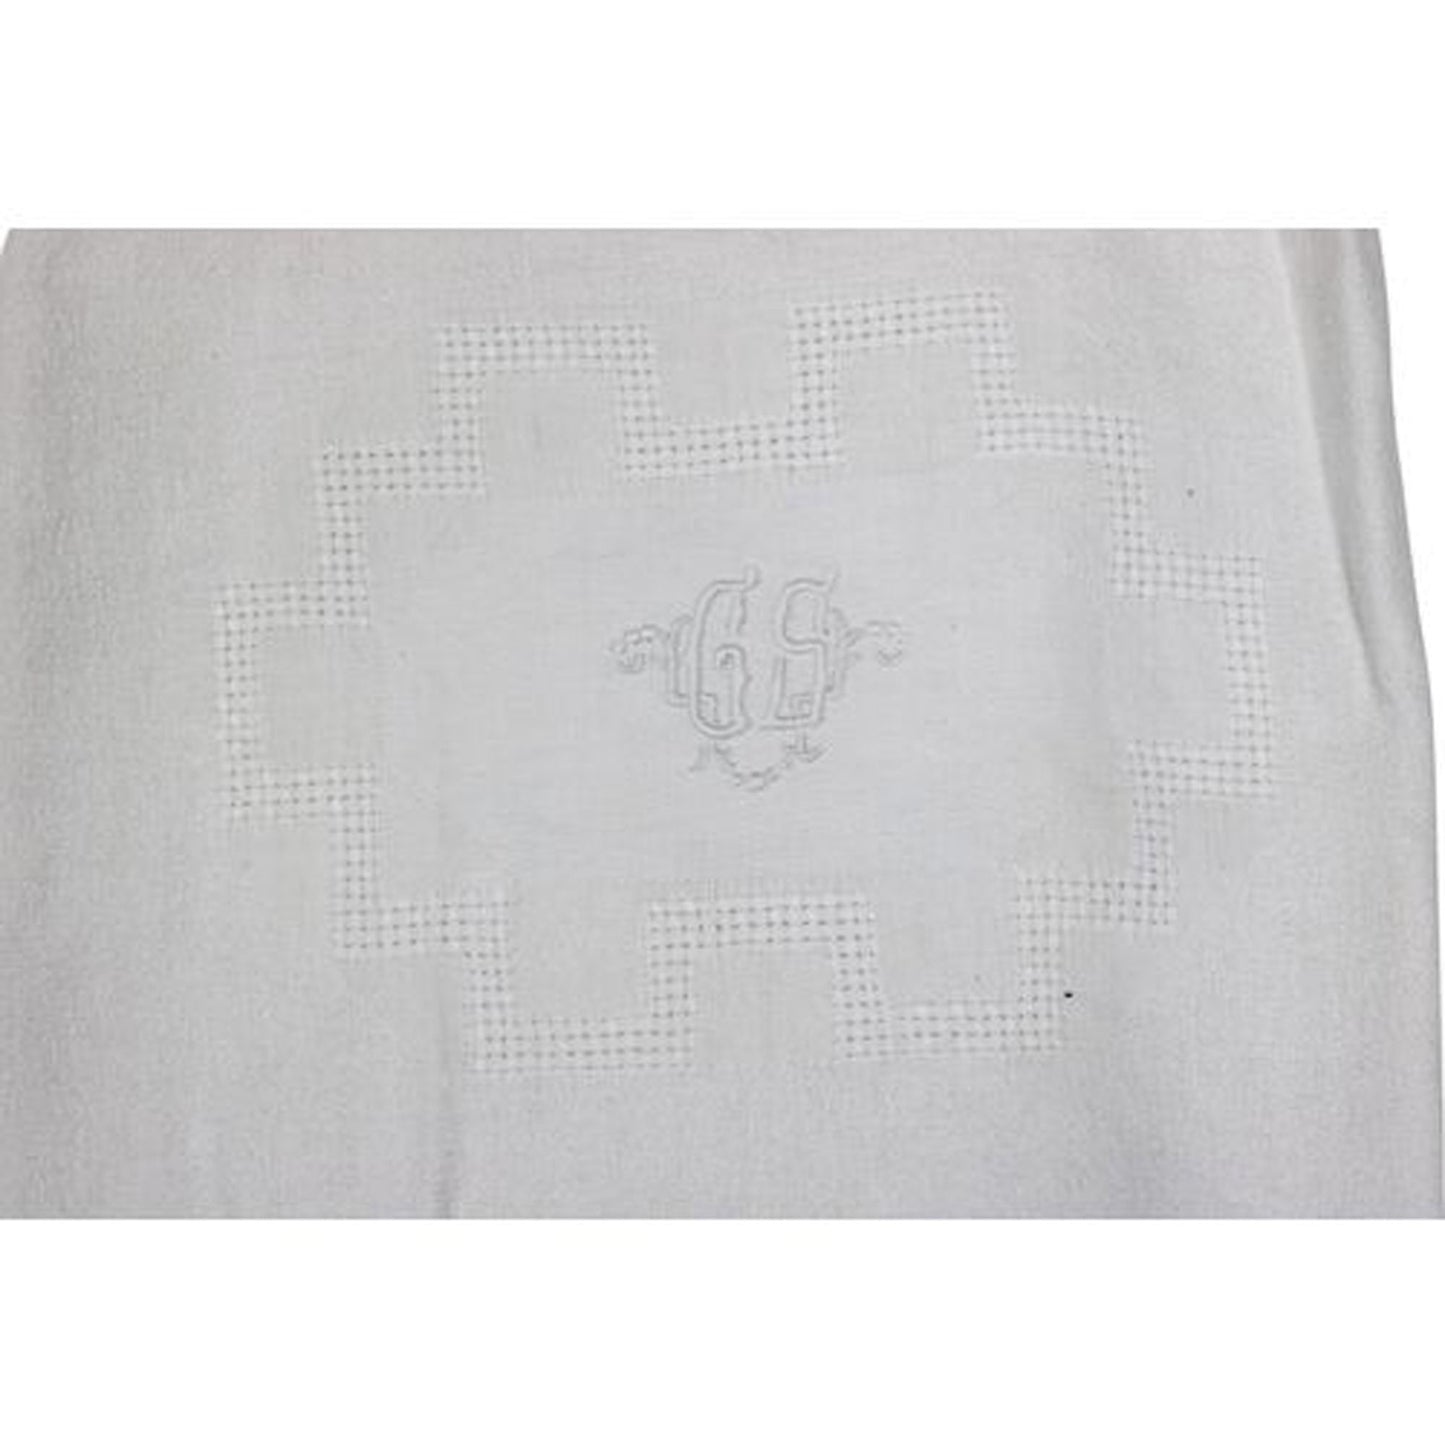 Antique French Linen Serviettes / Dinner Napkins w/ " GS " Monogram, Set of 8